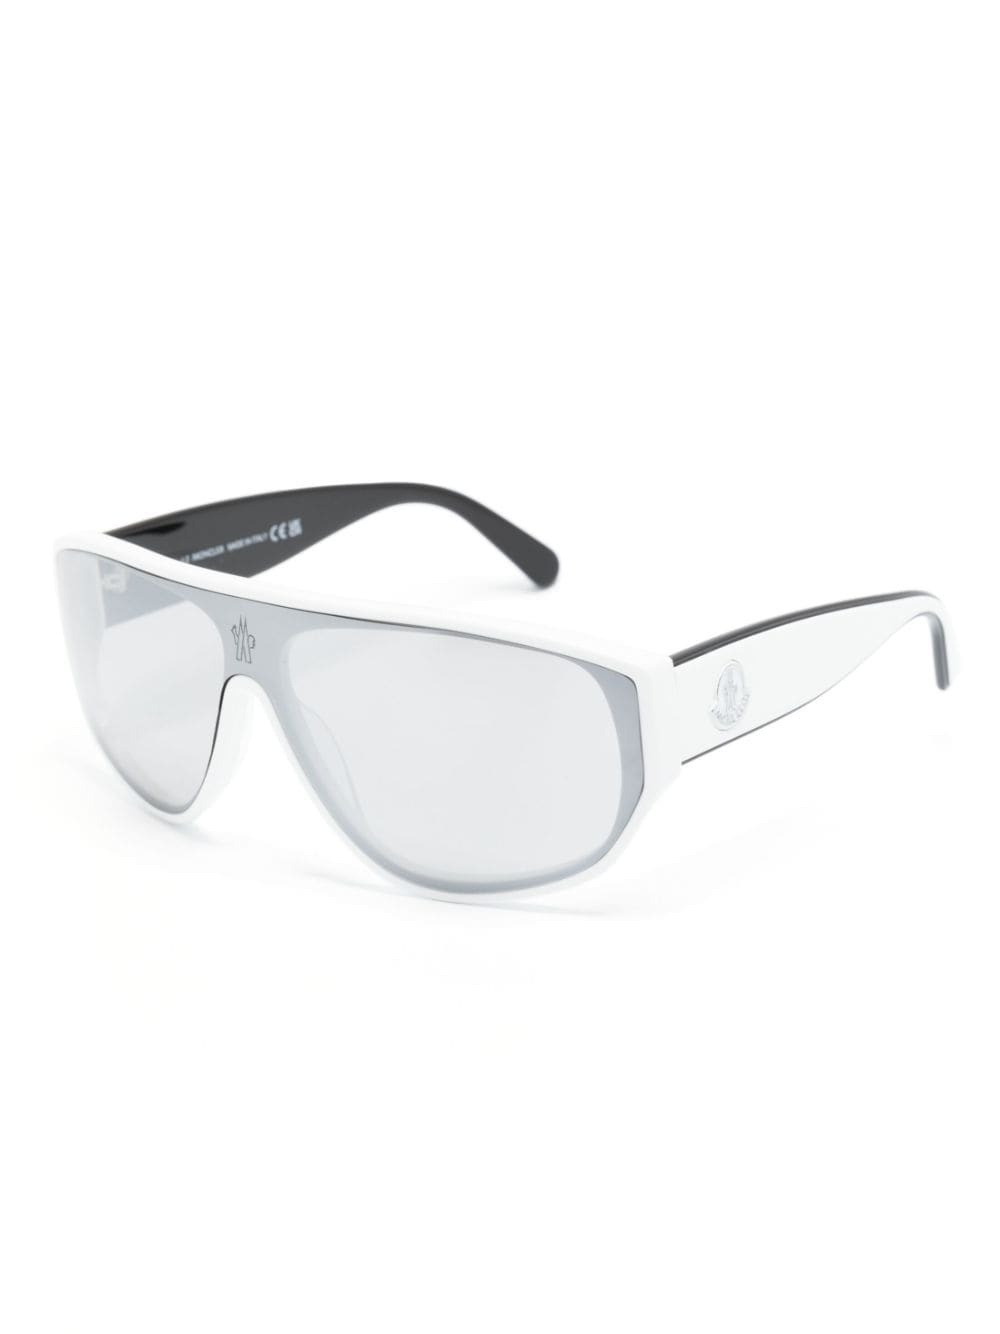 engraved-logo oversize-frame sunglasses - 2